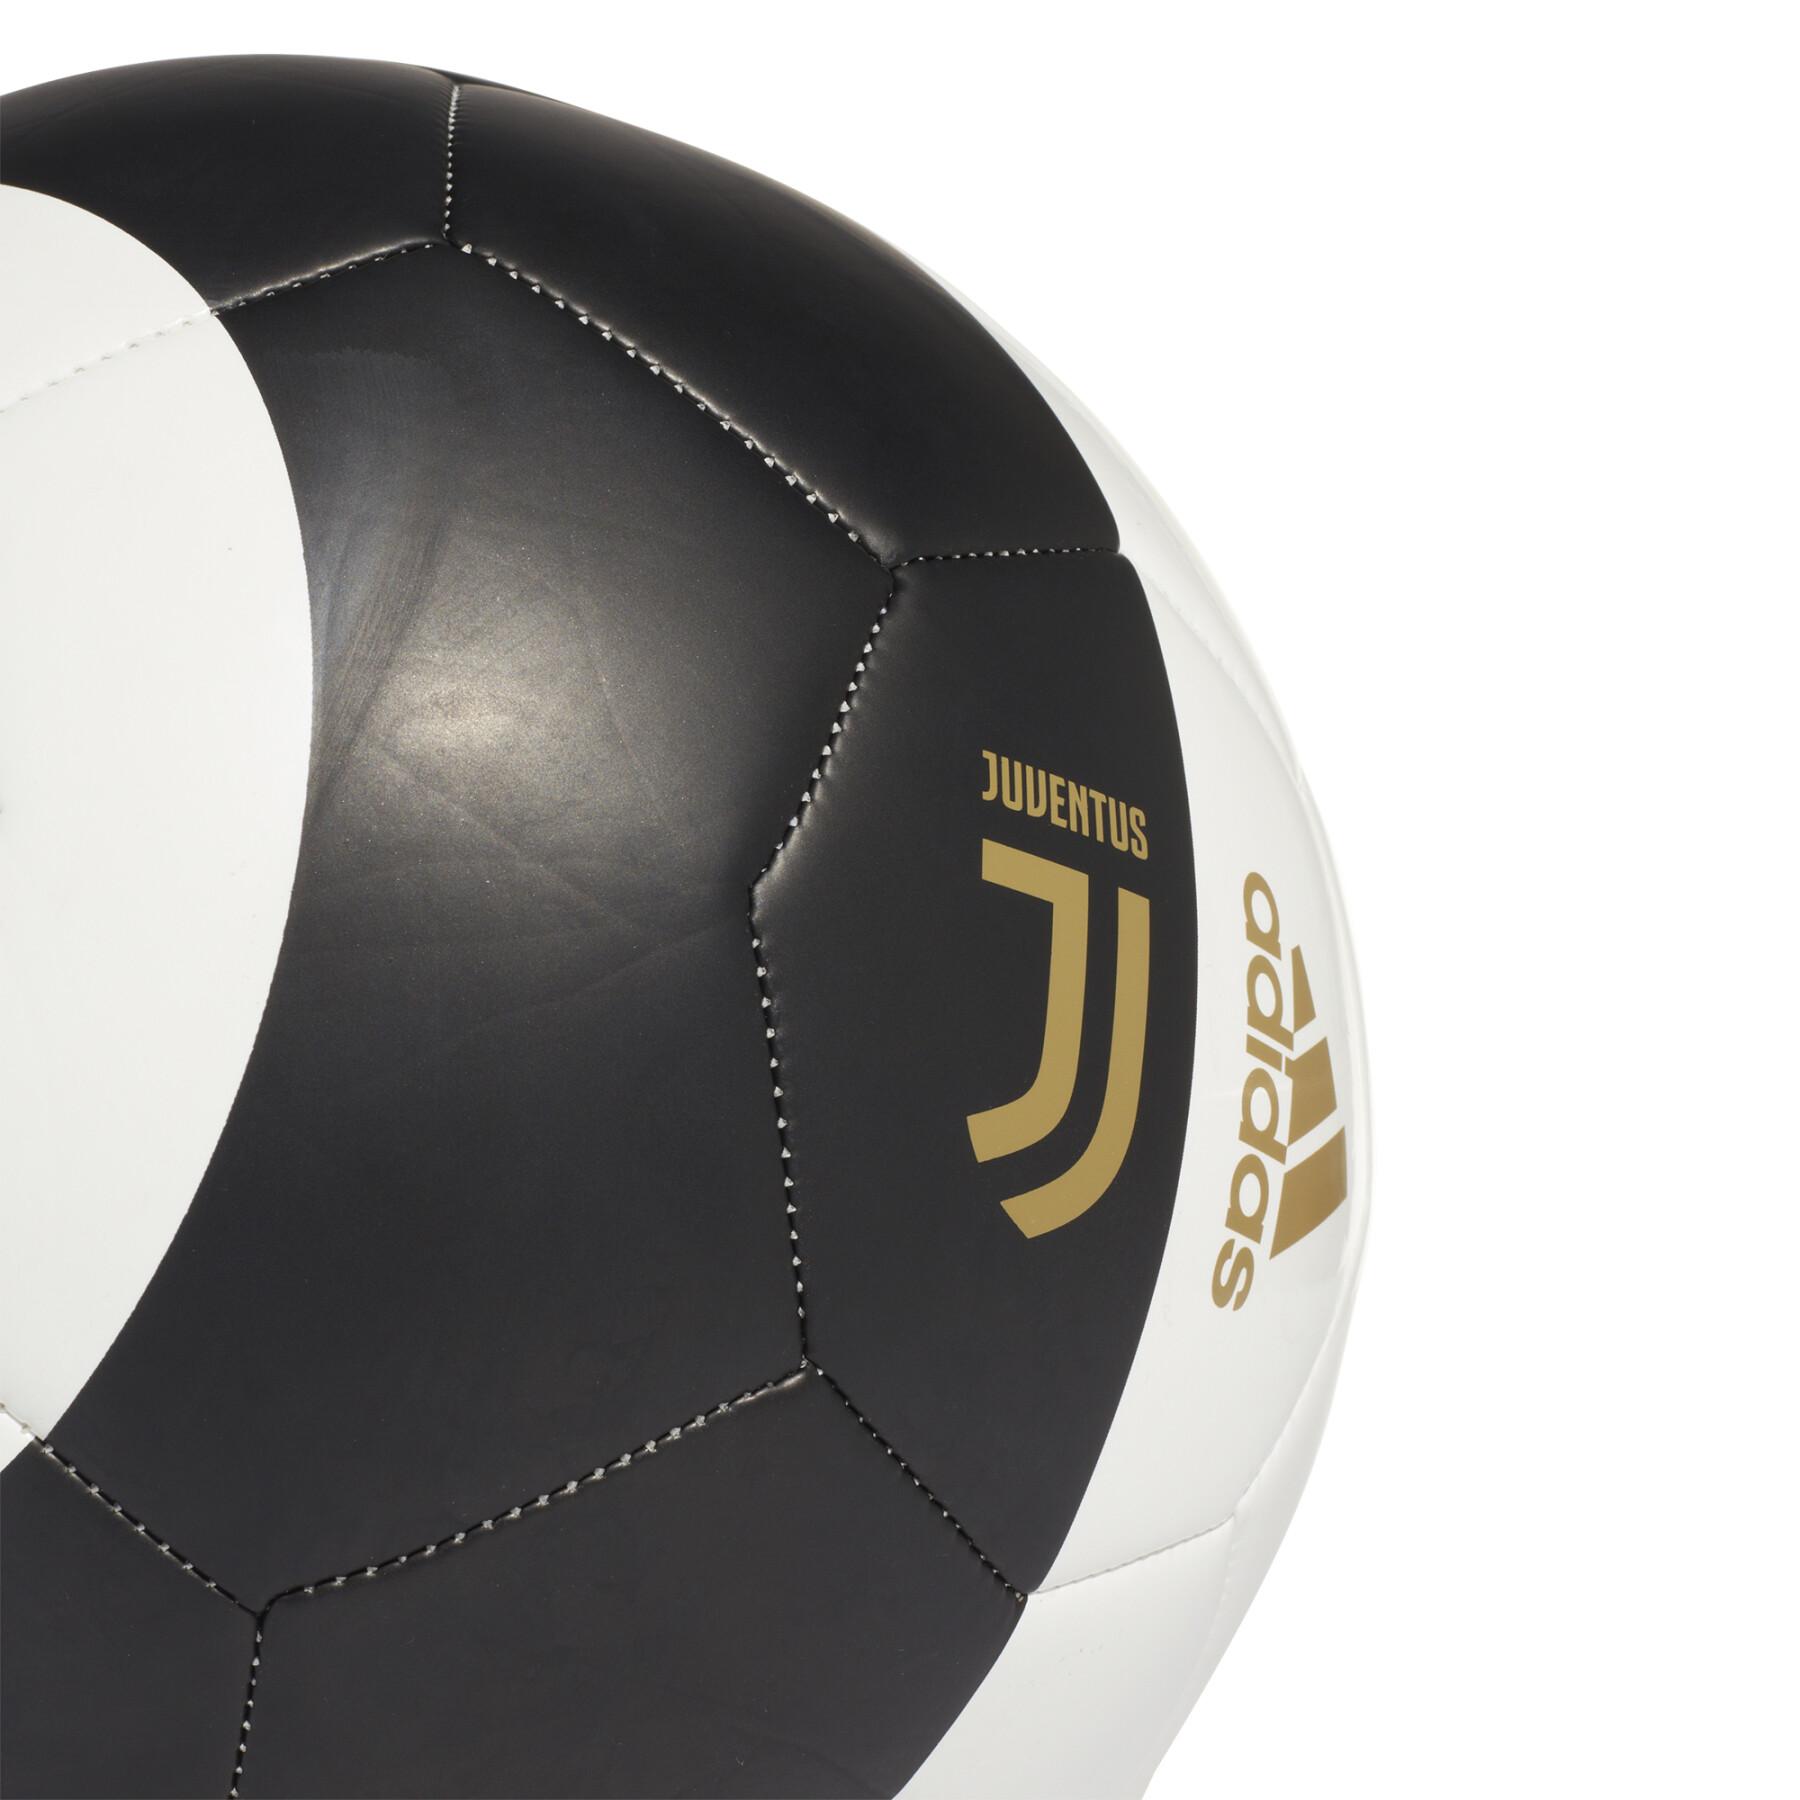 Balon Juventus Capitano